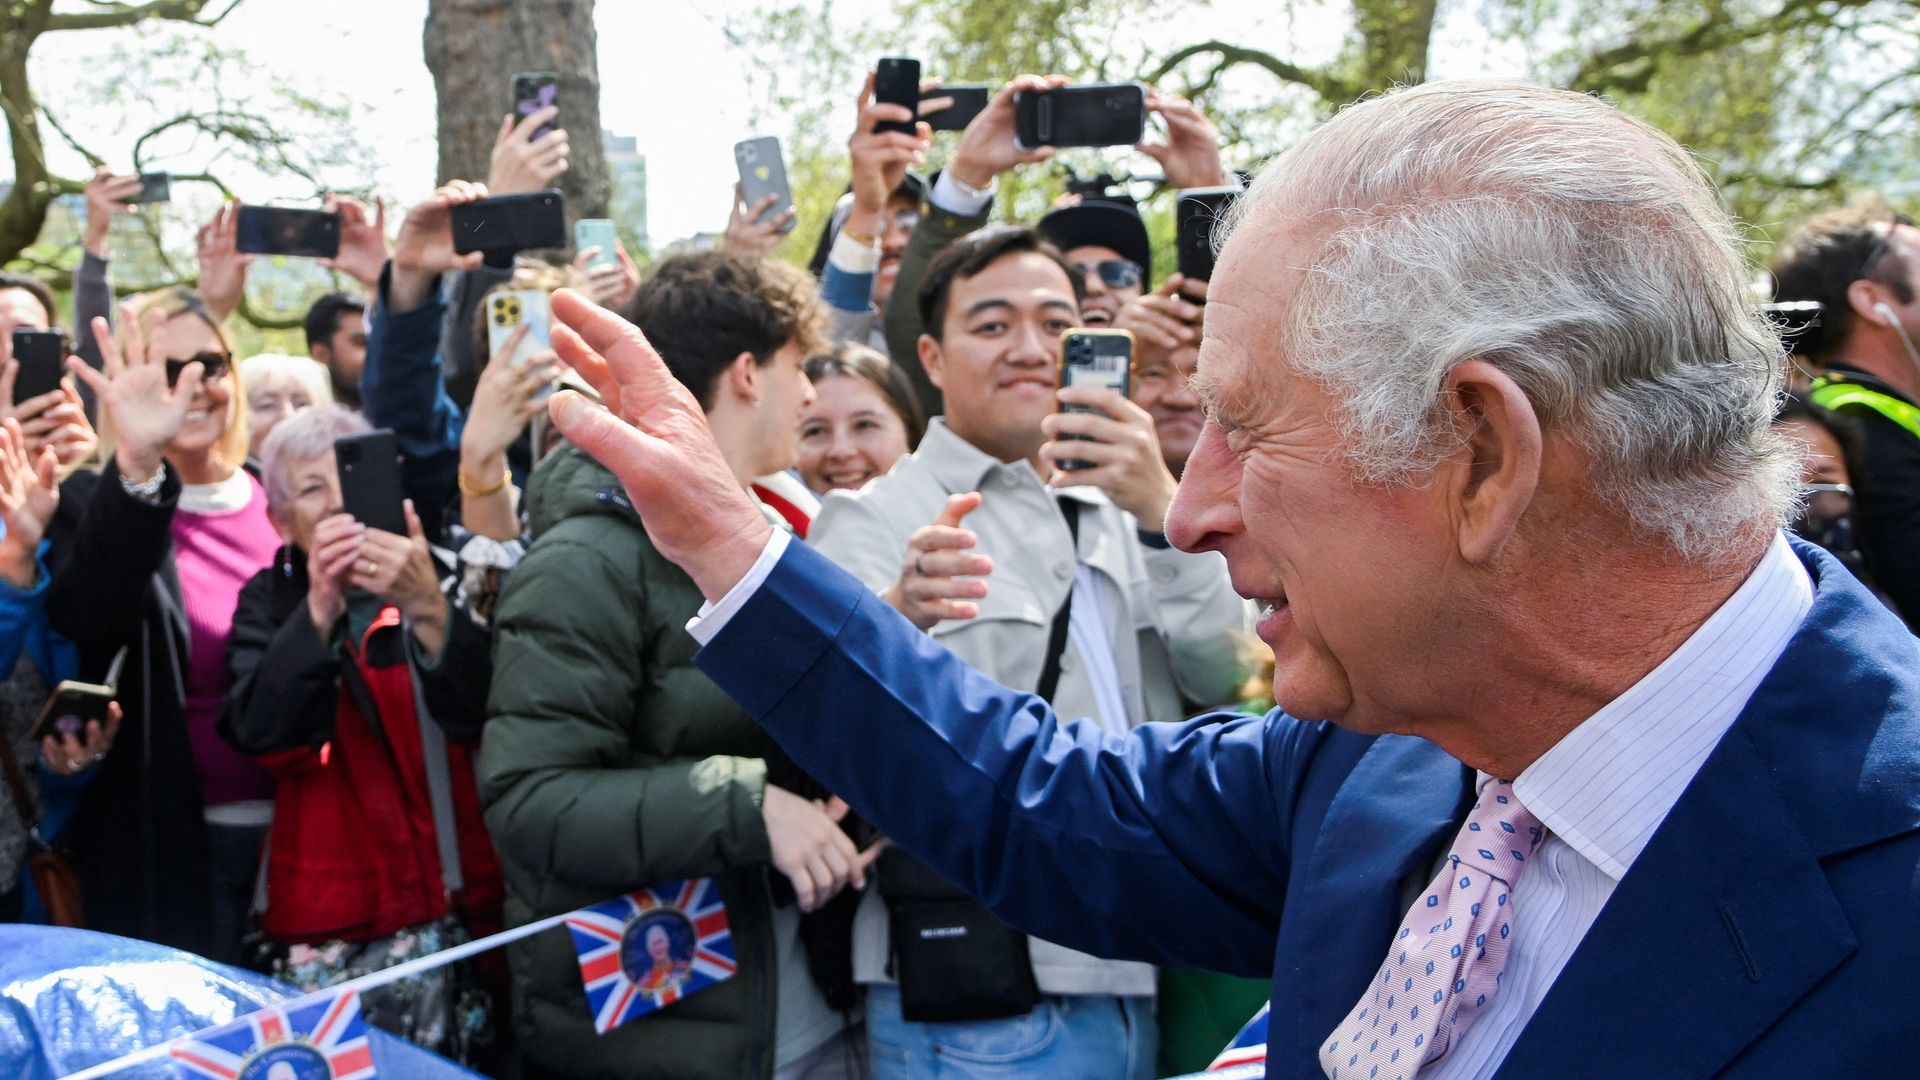 King Charles waving at crowds ahead of the coronation